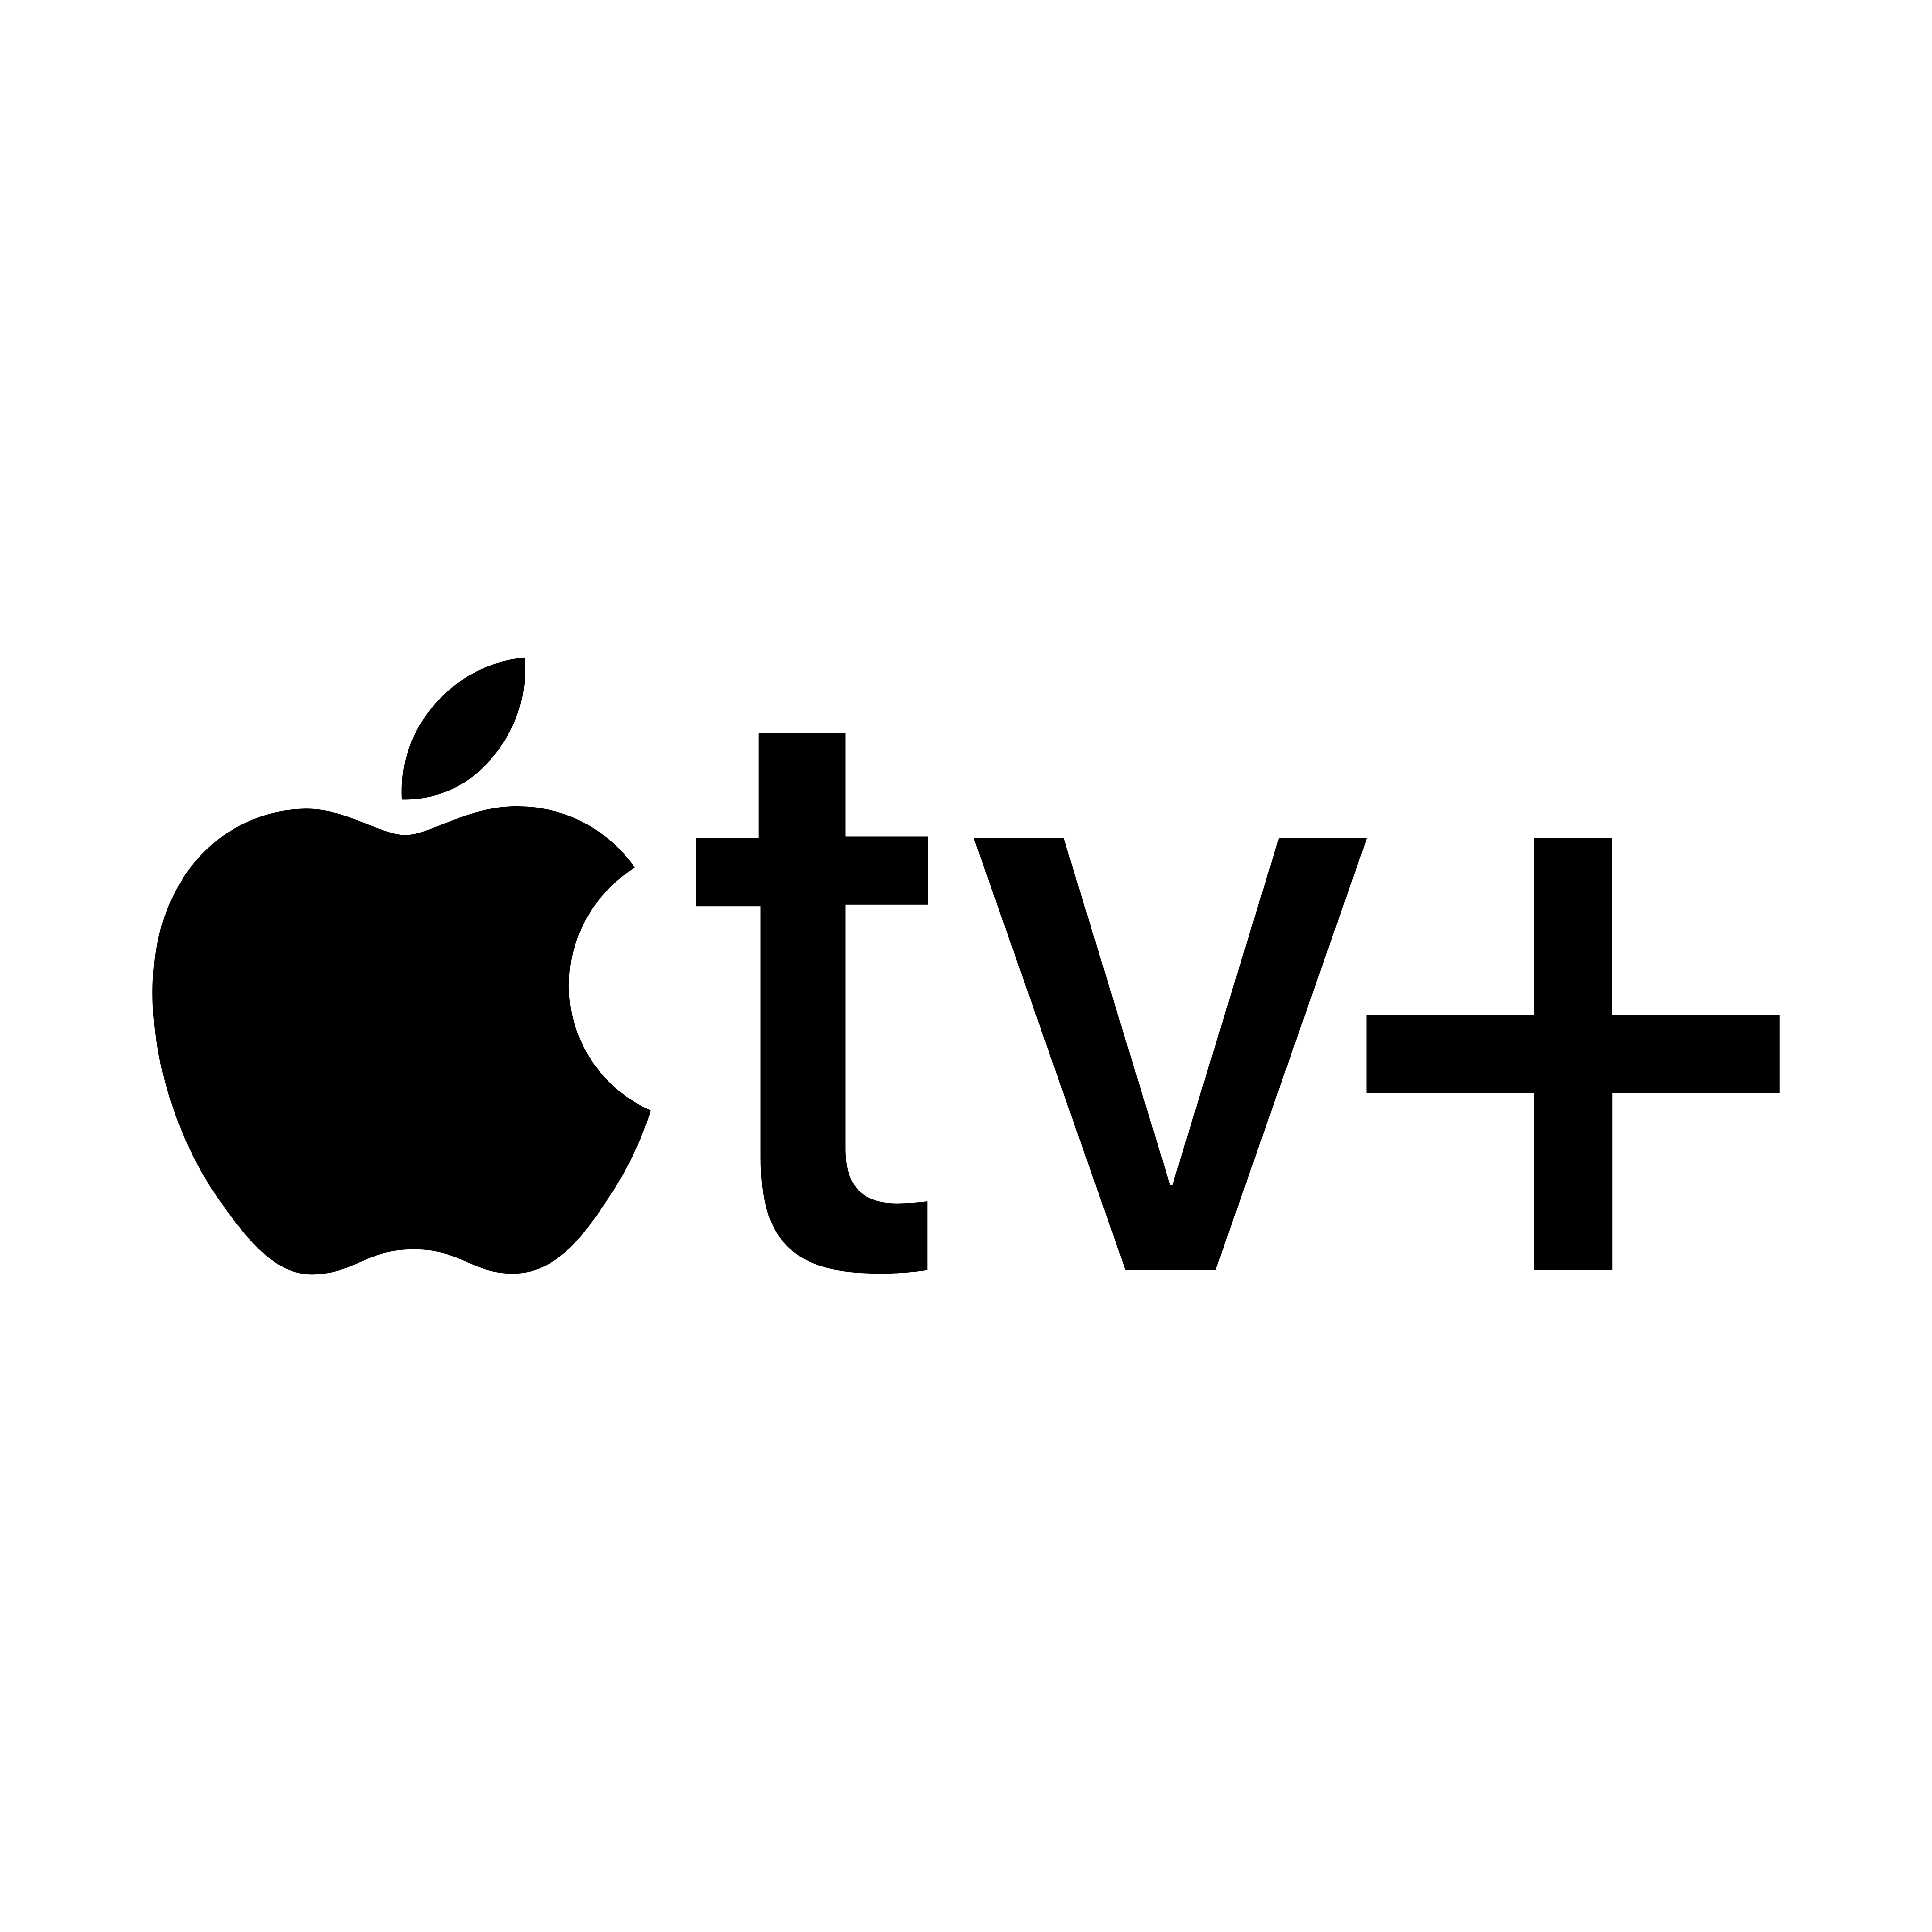 Logo de Apple TV